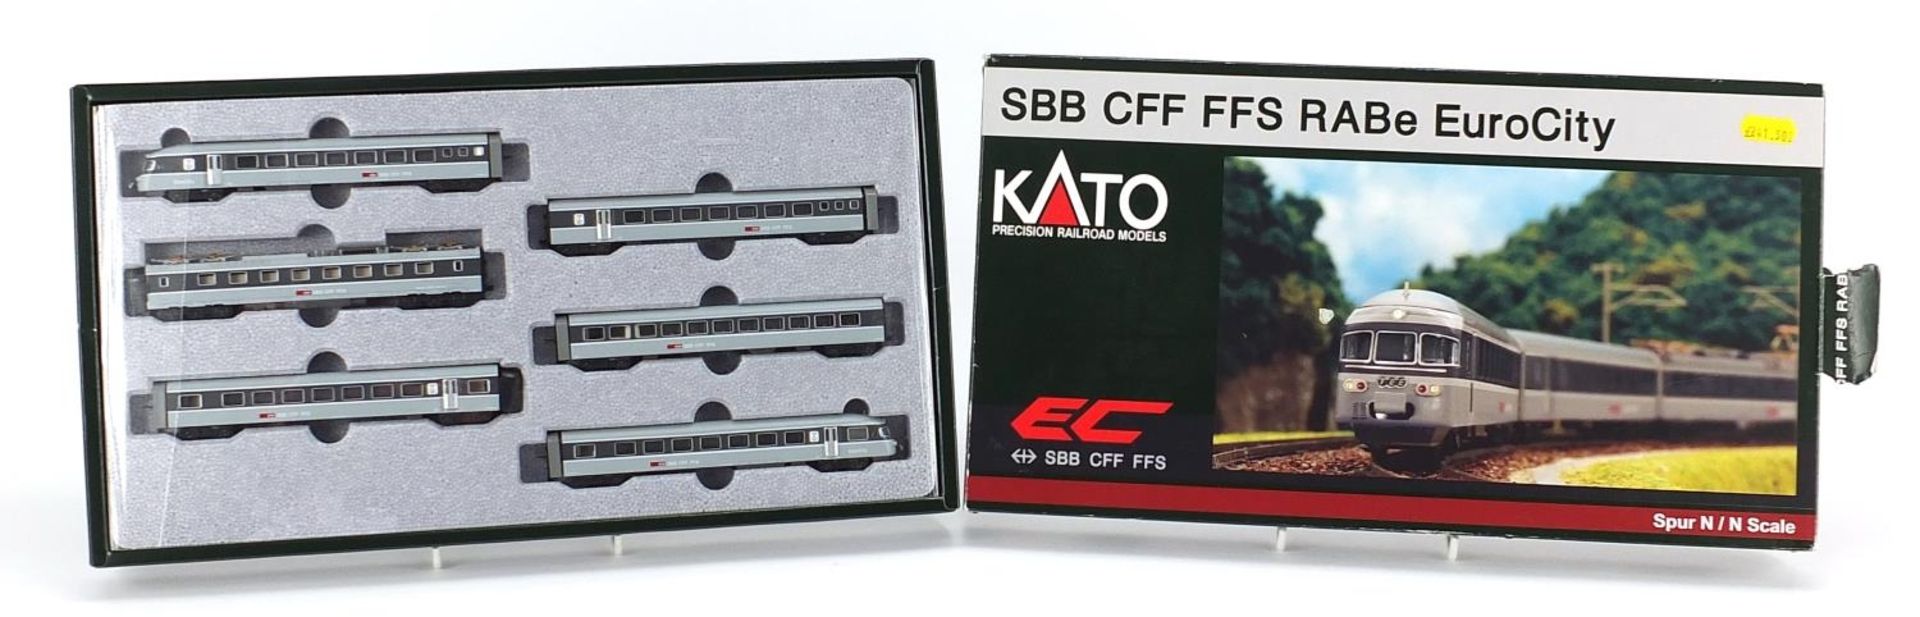 Kato N gauge model railway SBB CFF FFS RABe Euro City 6 - TLG set with box